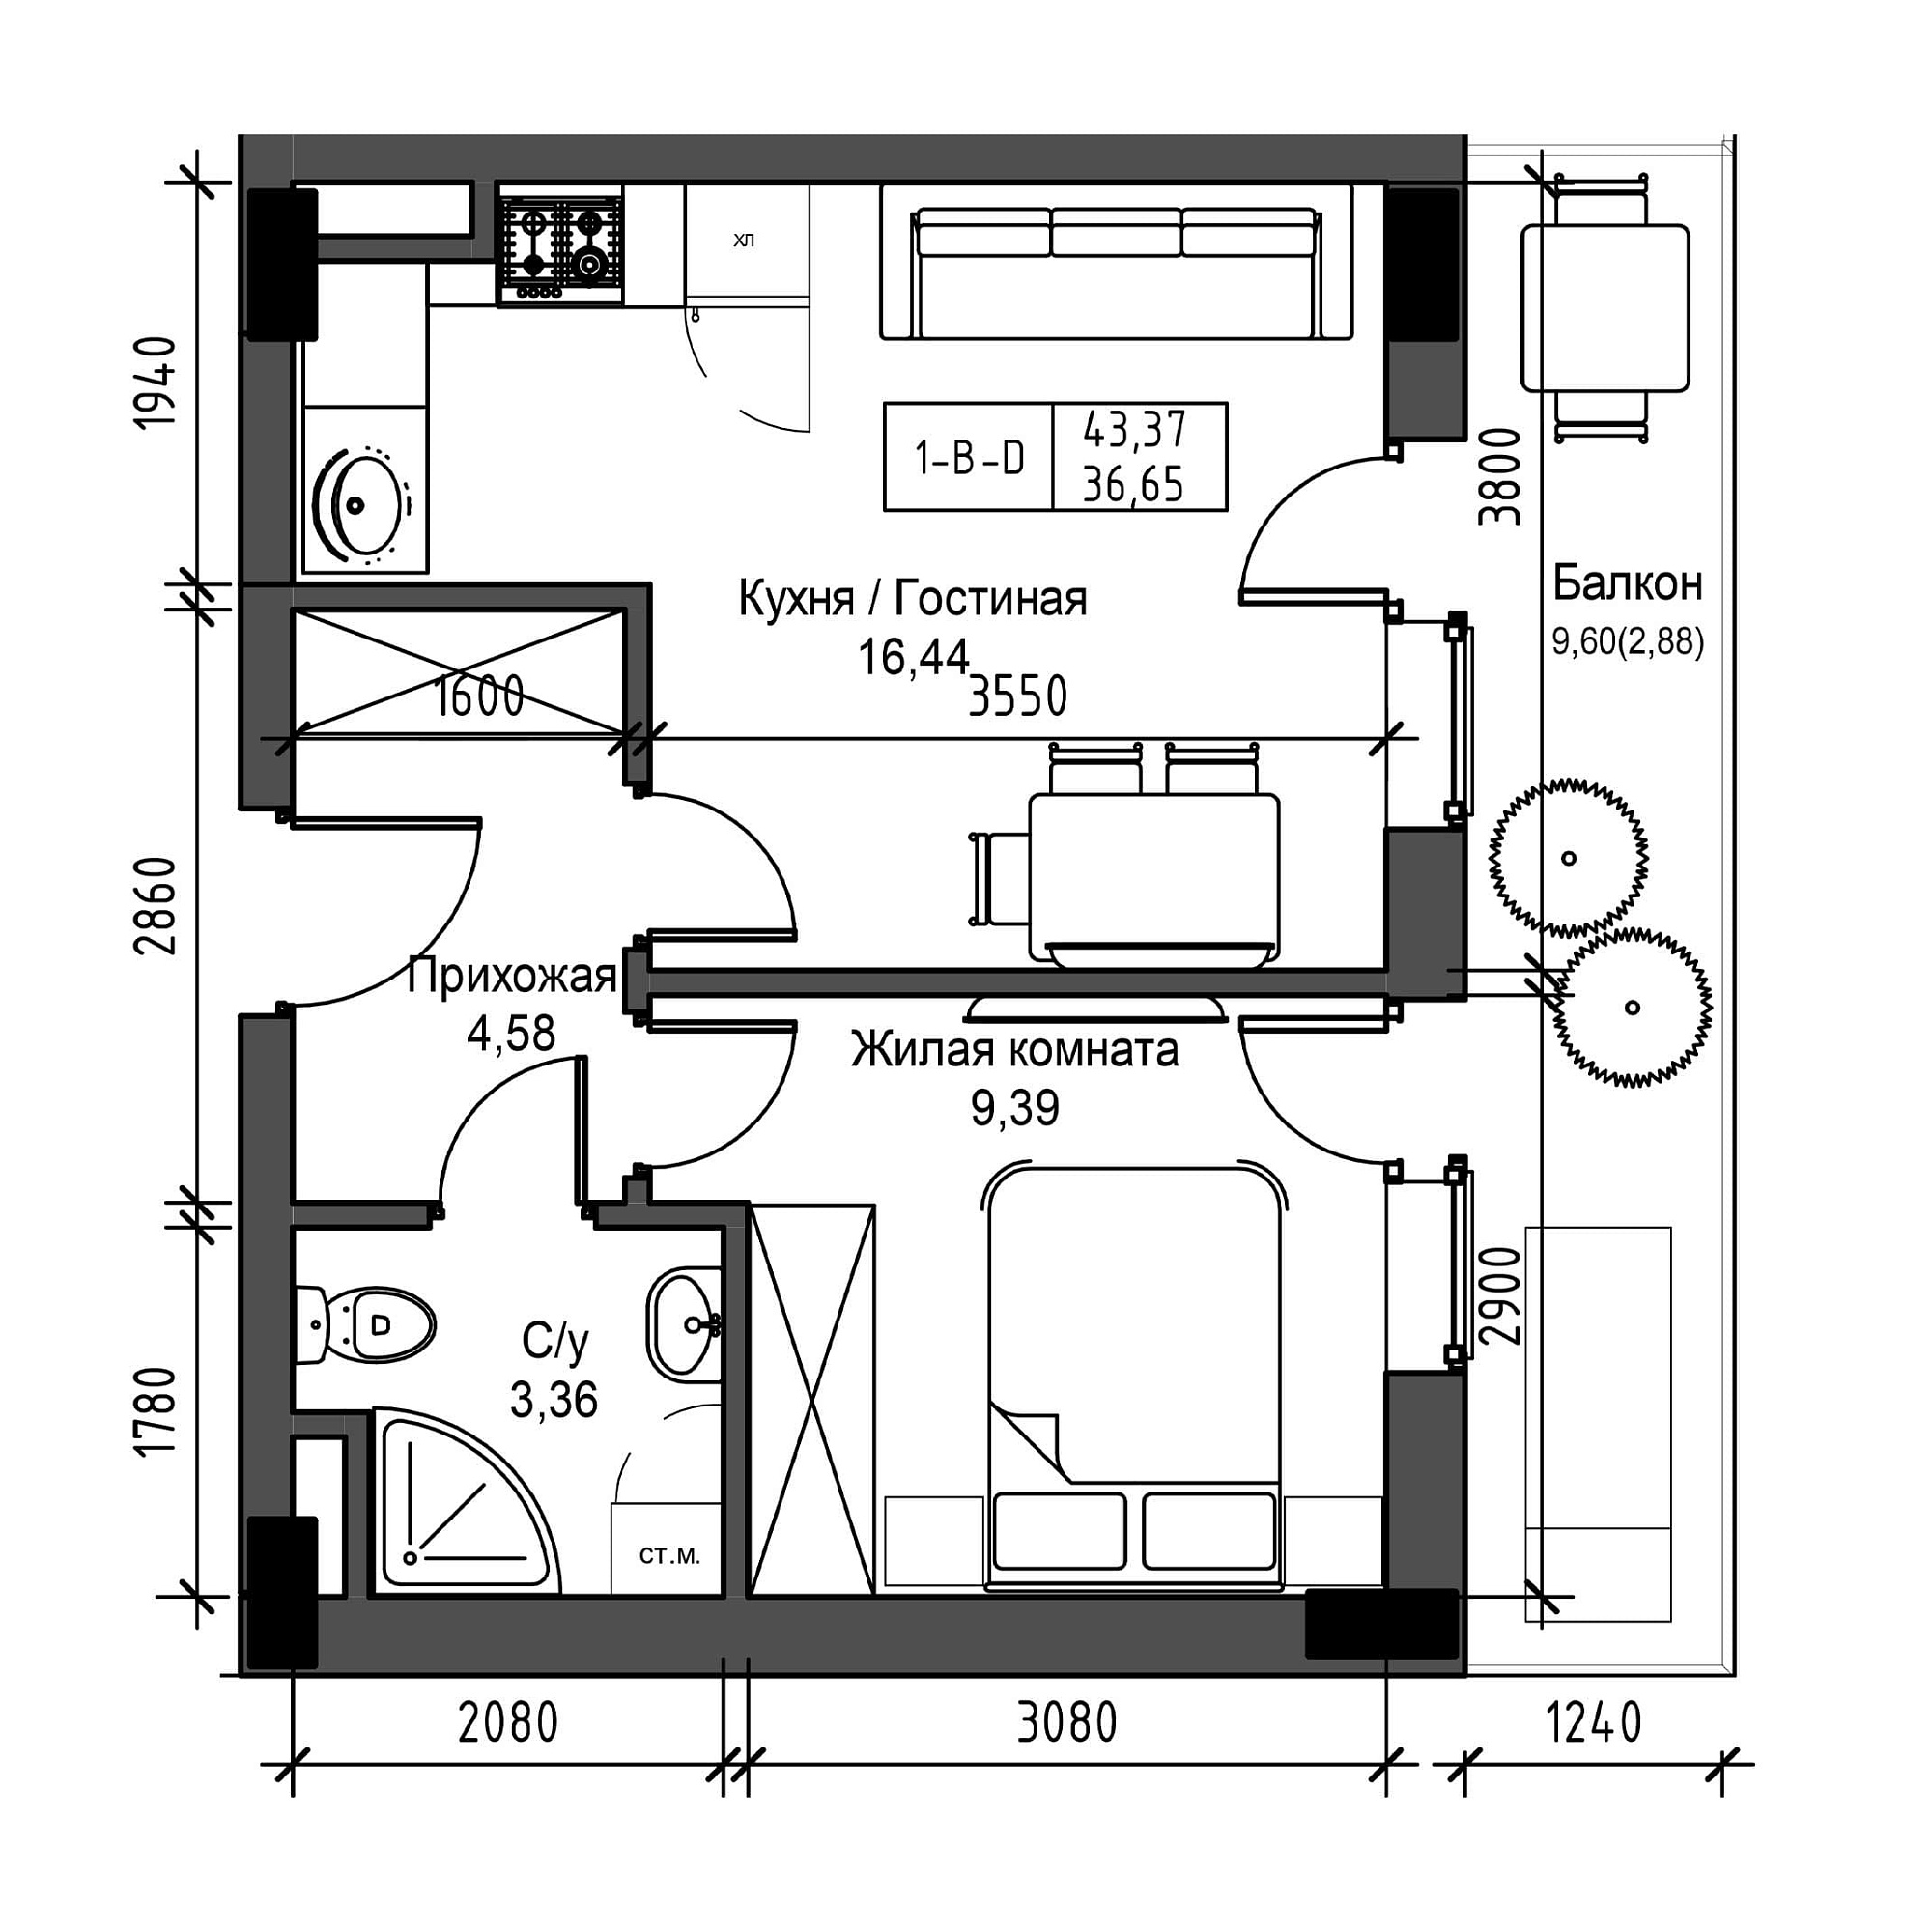 Планування 1-к квартира площею 36.65м2, UM-001-07/0002.